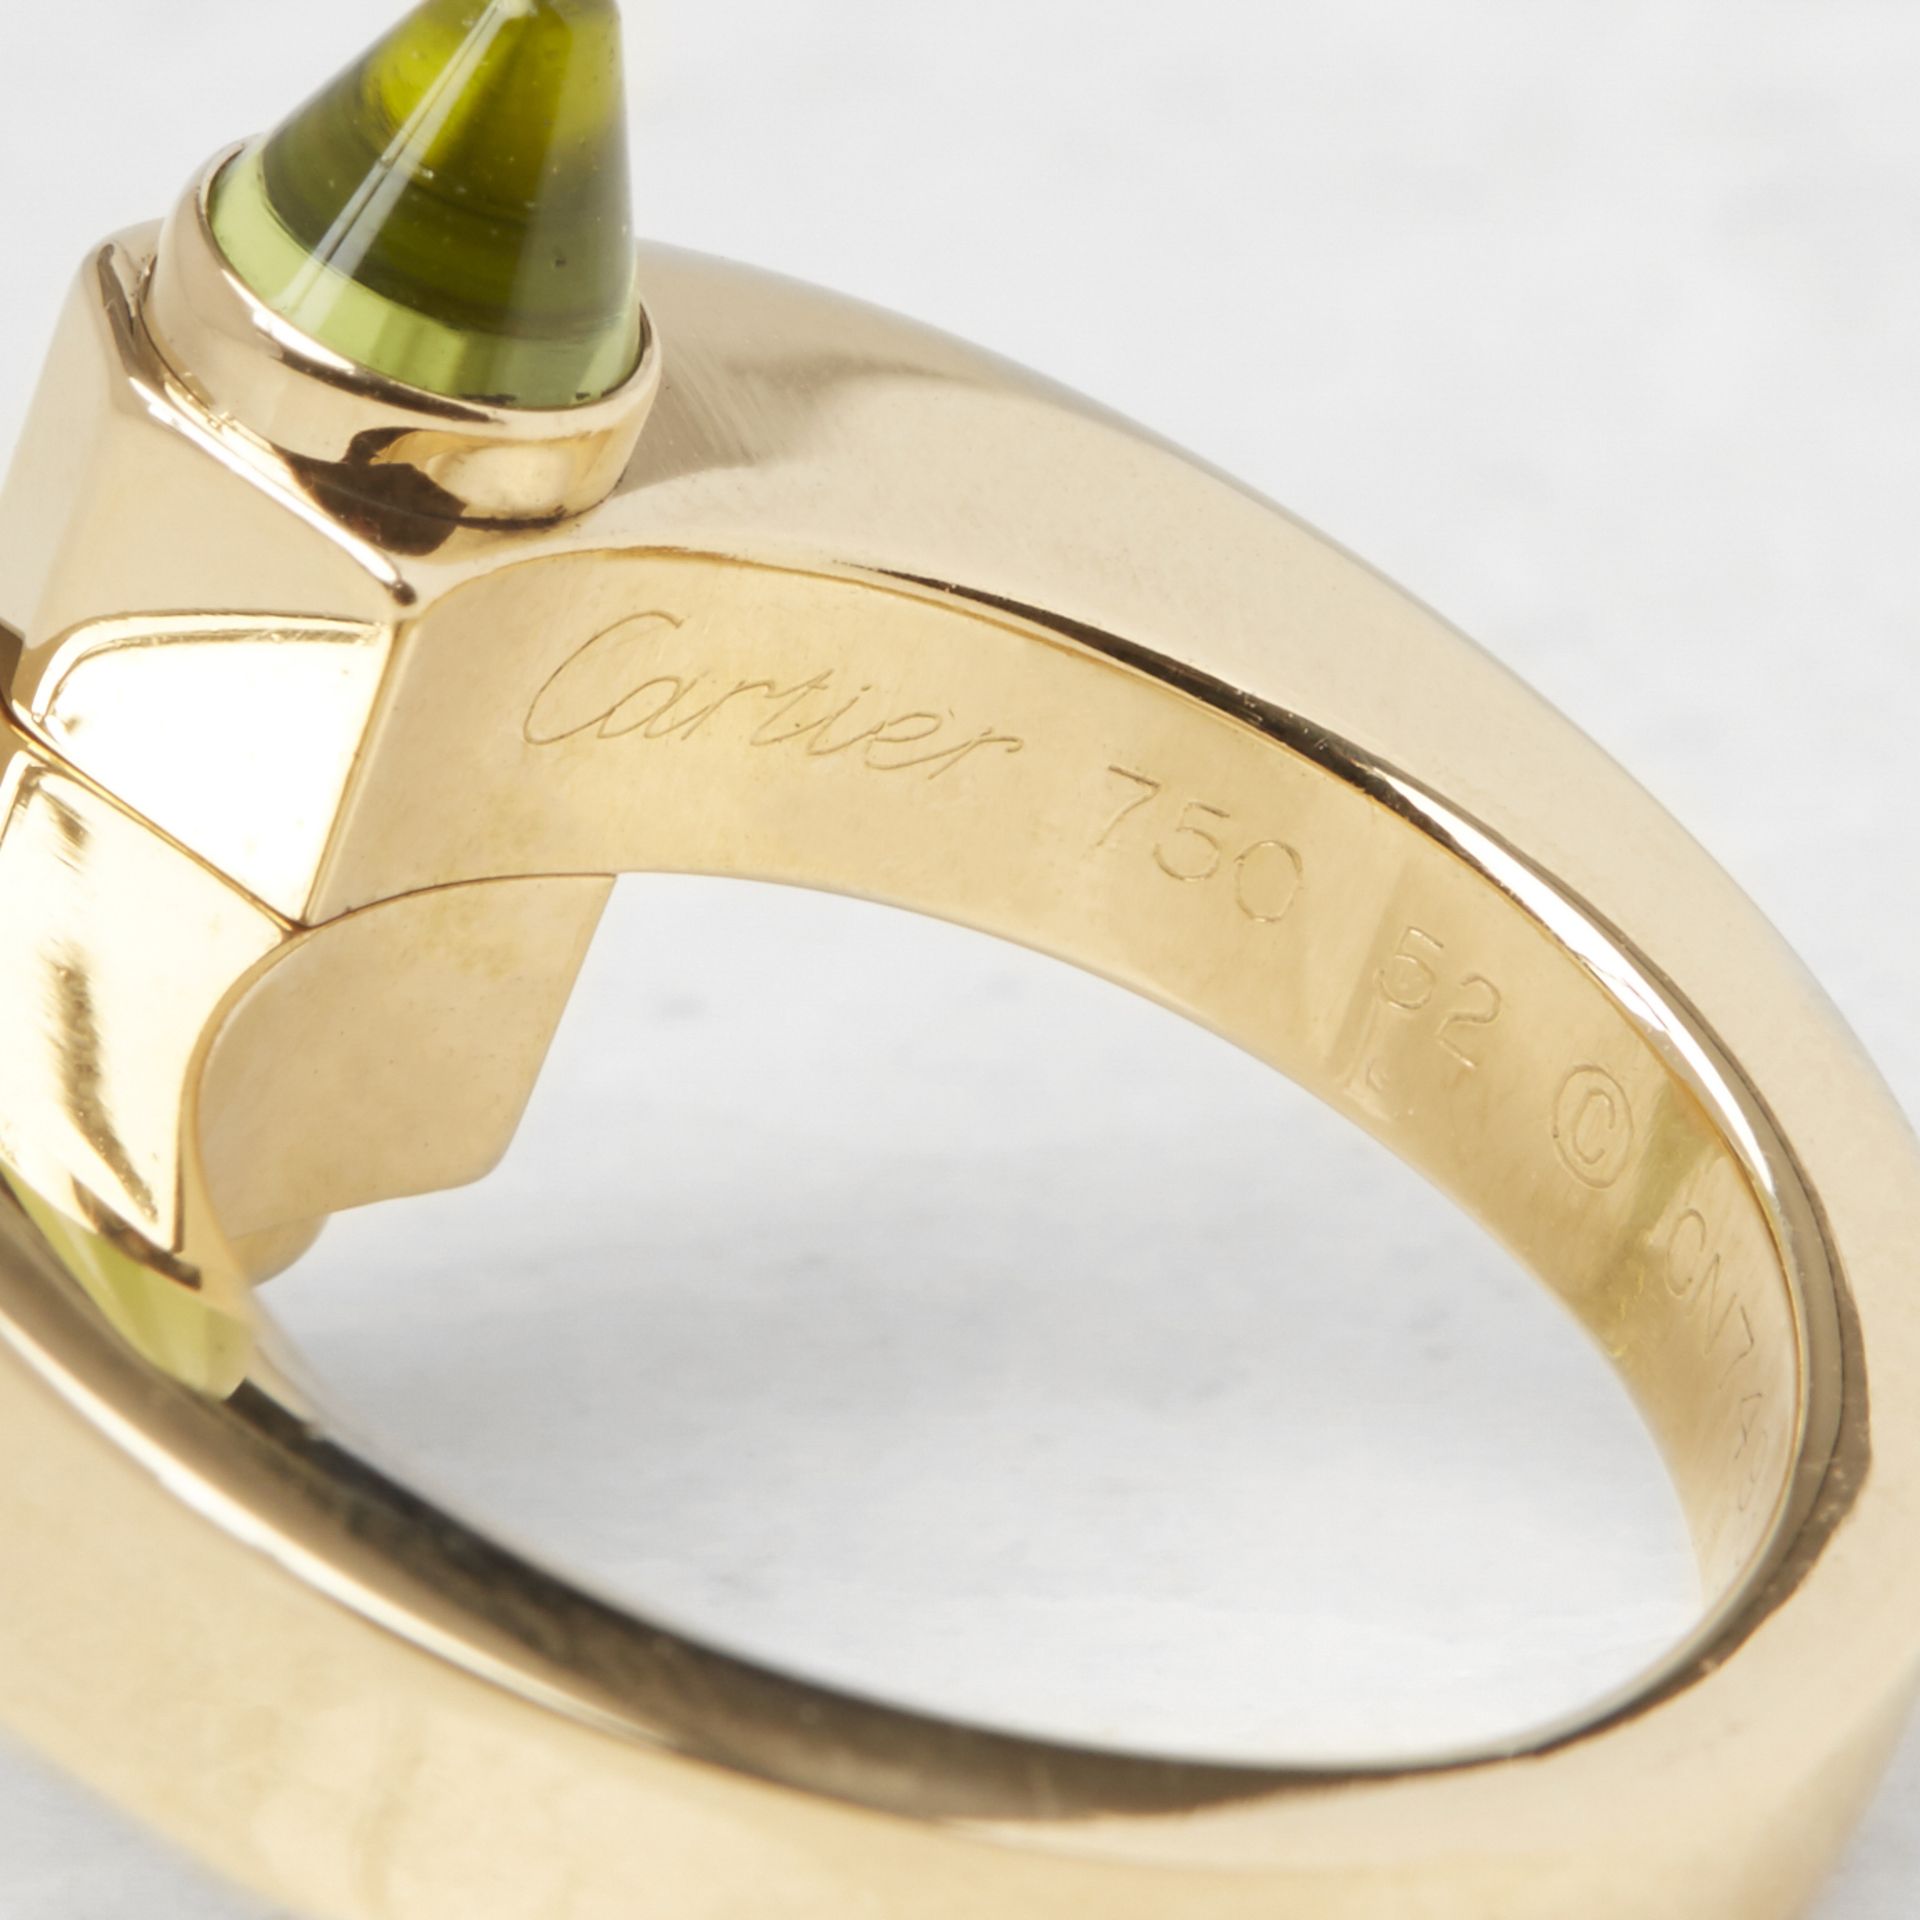 Cartier 18k Yellow Gold Peridot Menotte Ring - Image 10 of 11